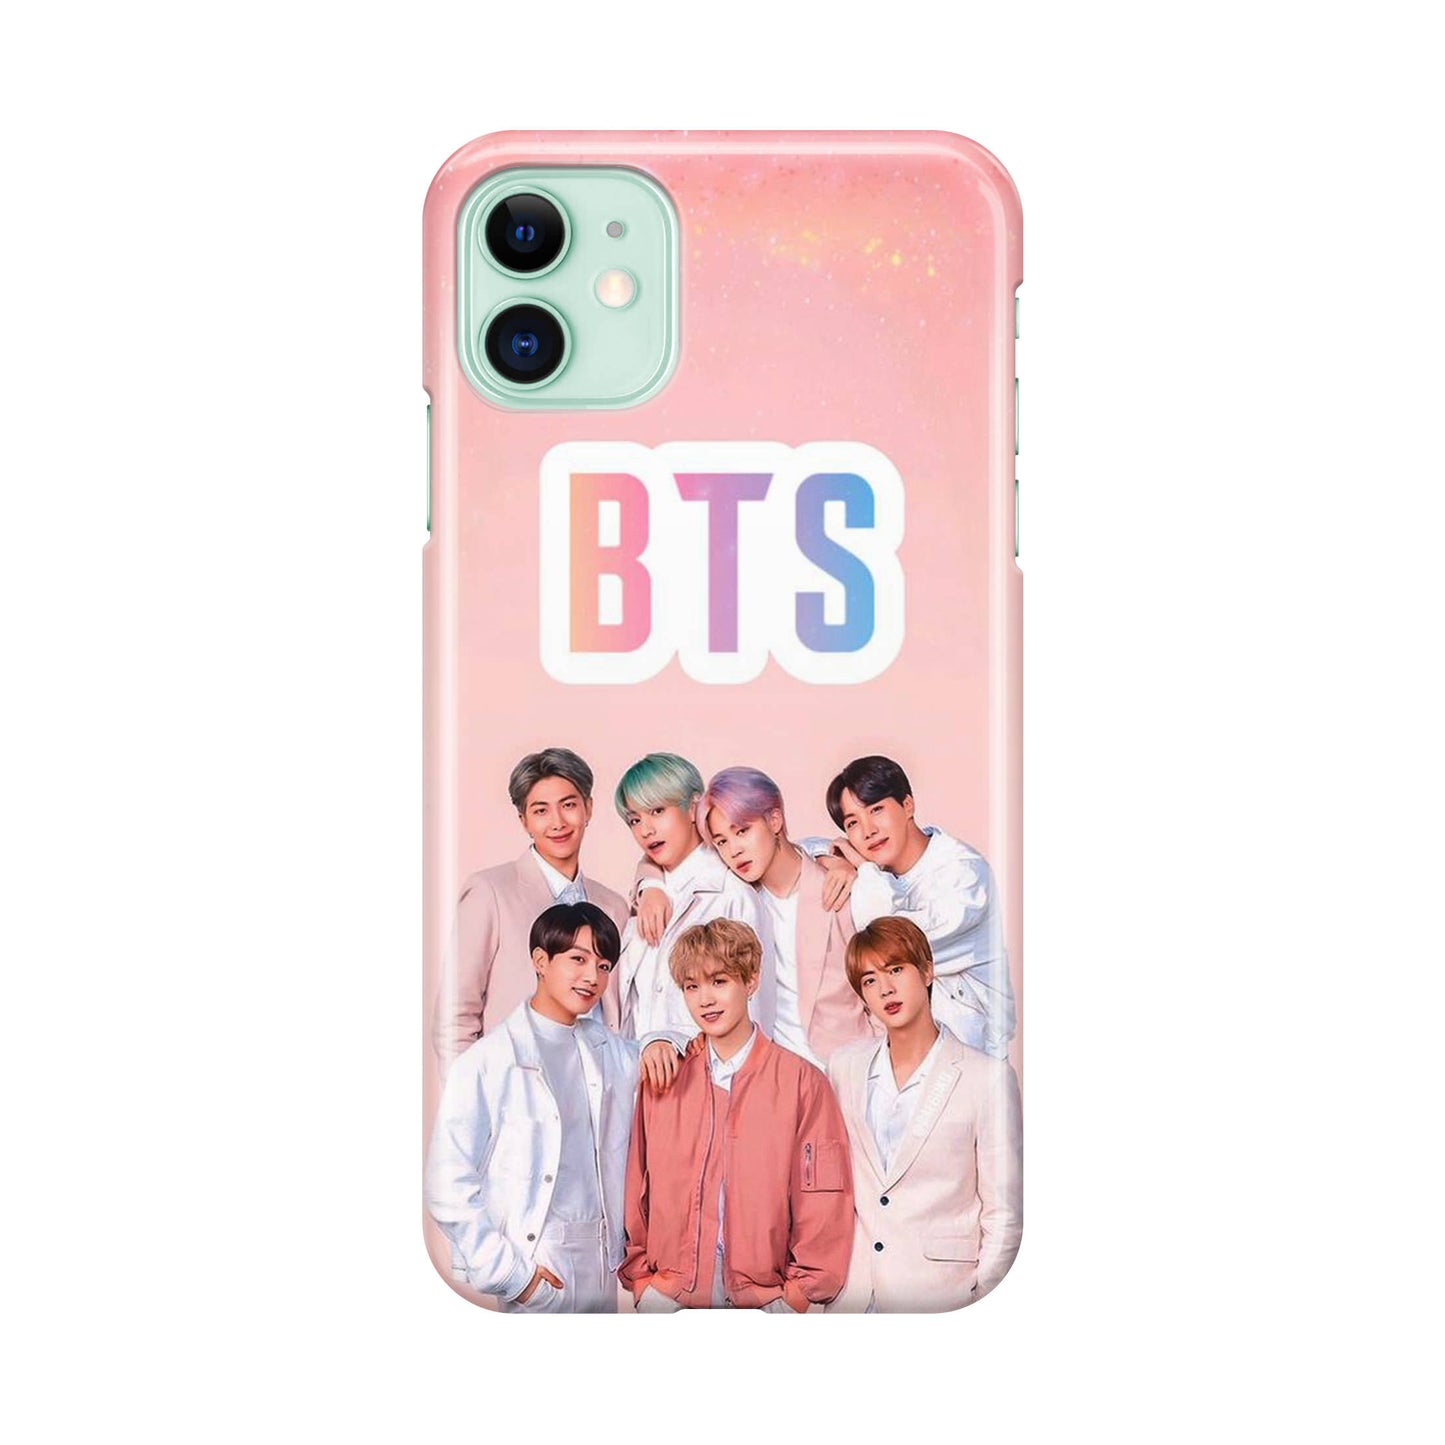 BTS Member in Pink iPhone 11 Case